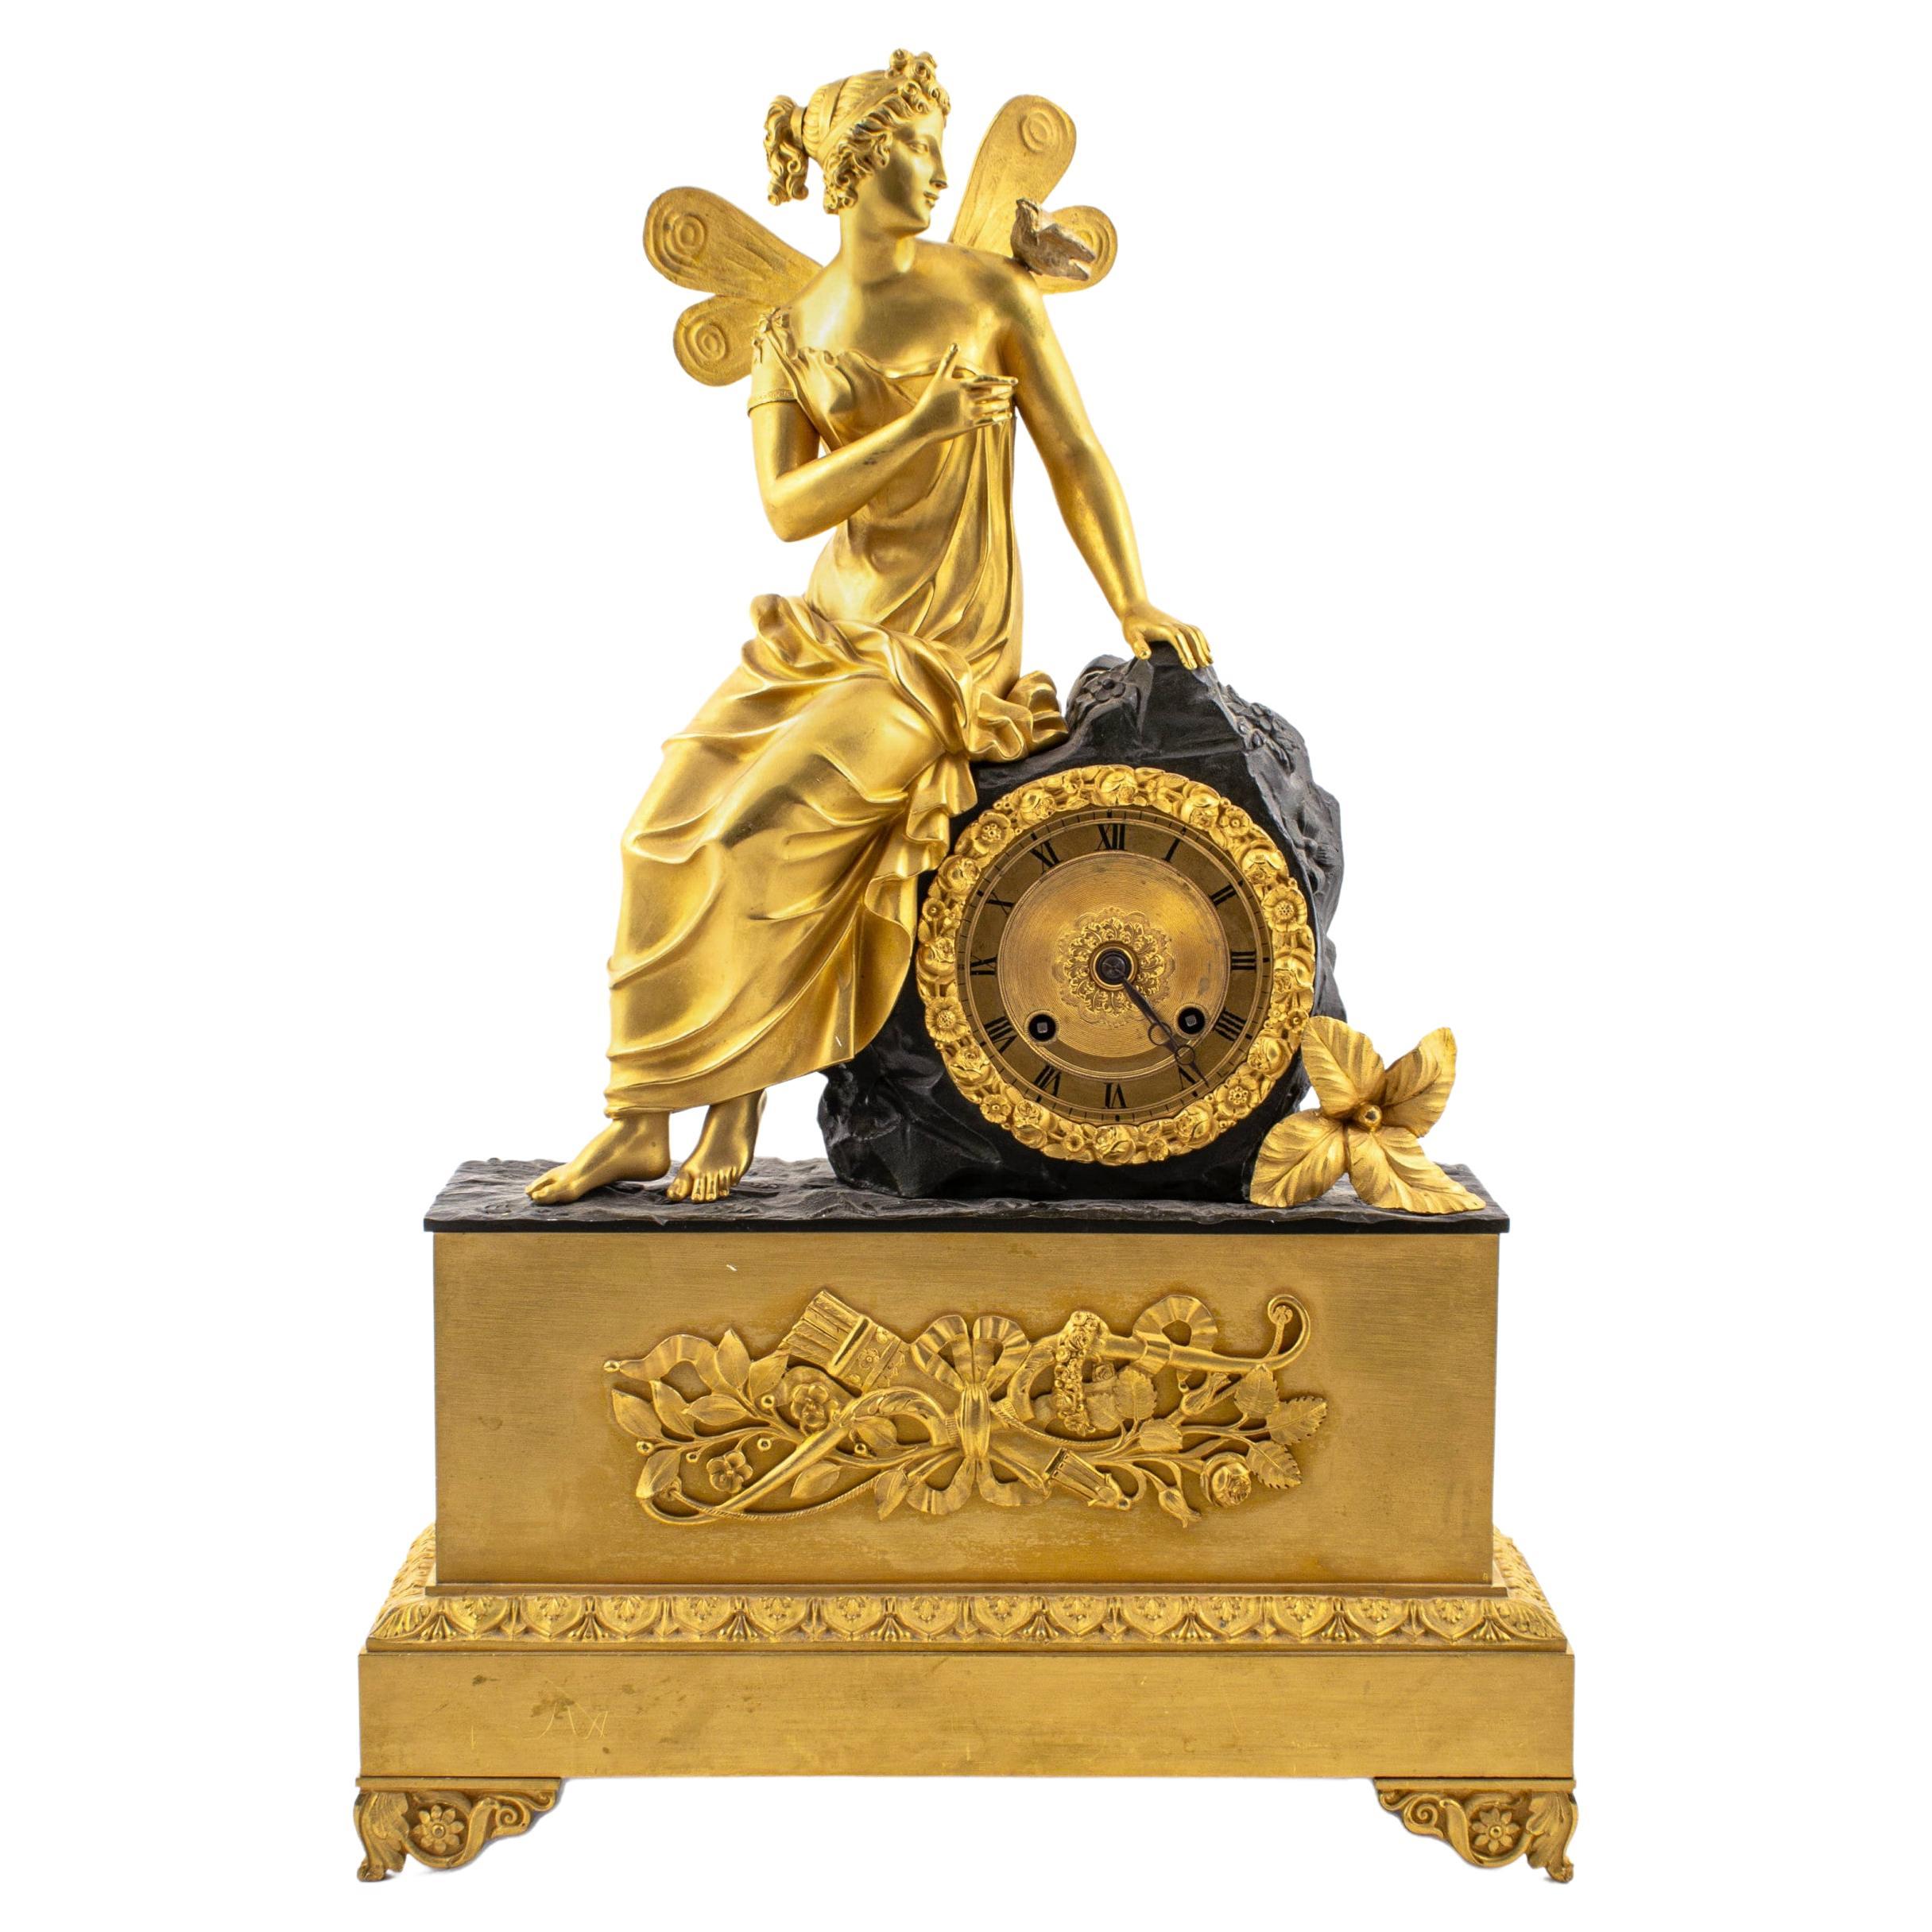 Horloge Louis Phillippe en bronze, France, vers 1830-1840